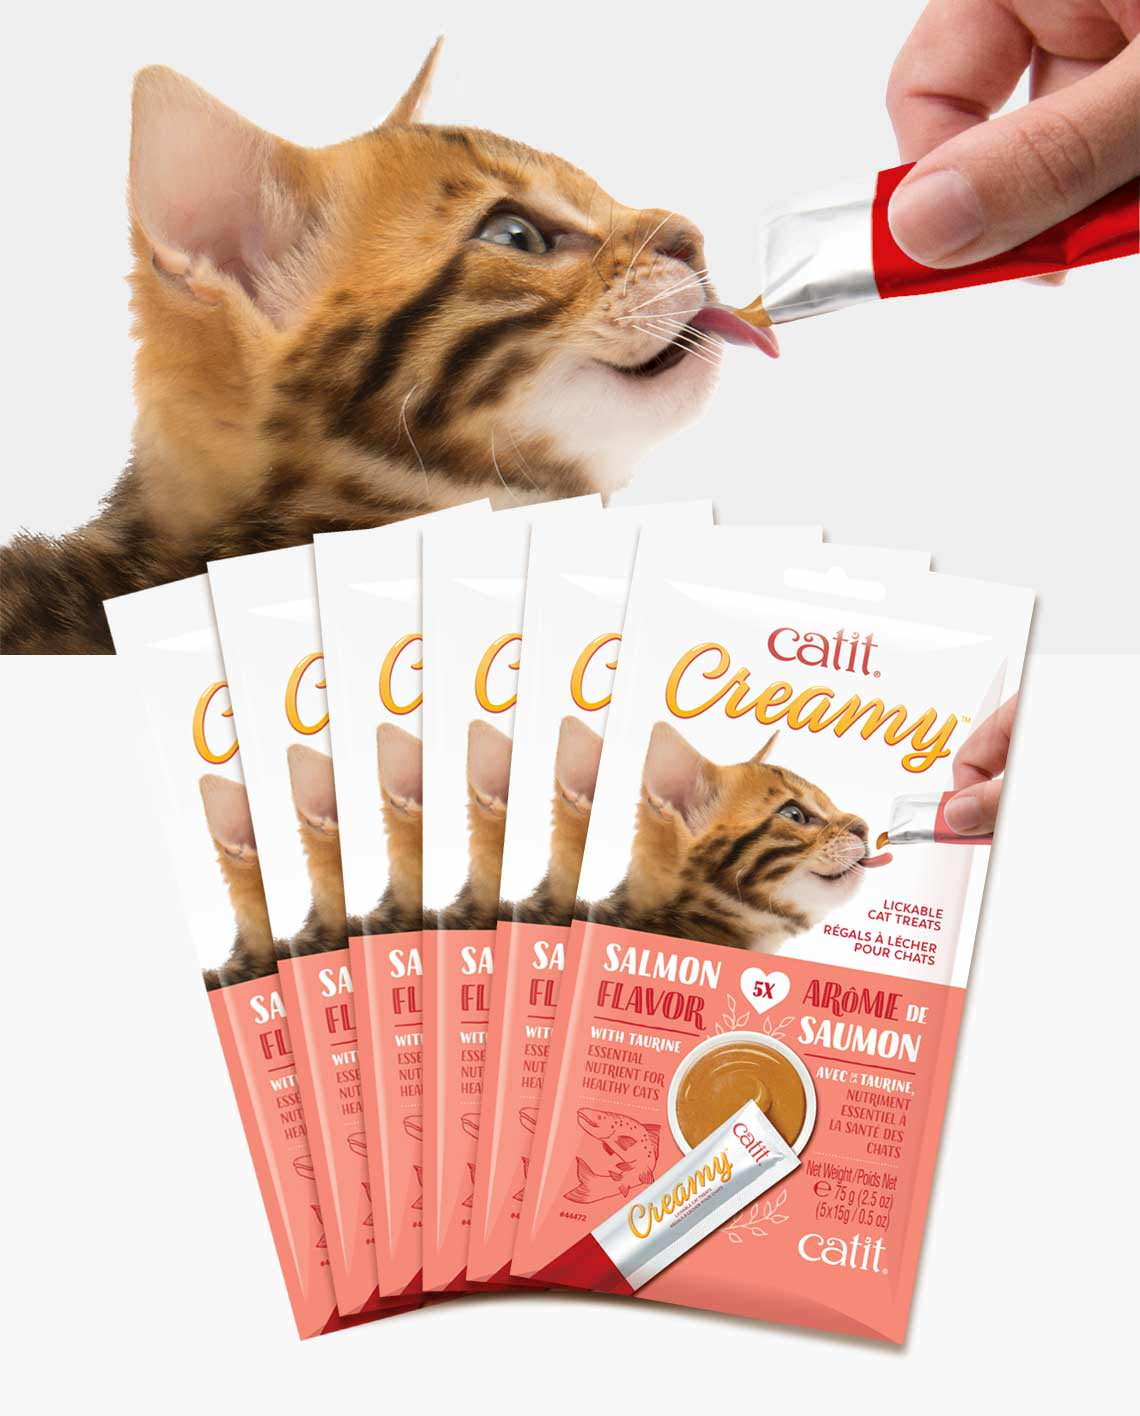 Catit Creamy Lickable Cat Treats Tube, Salmon 30 Pack